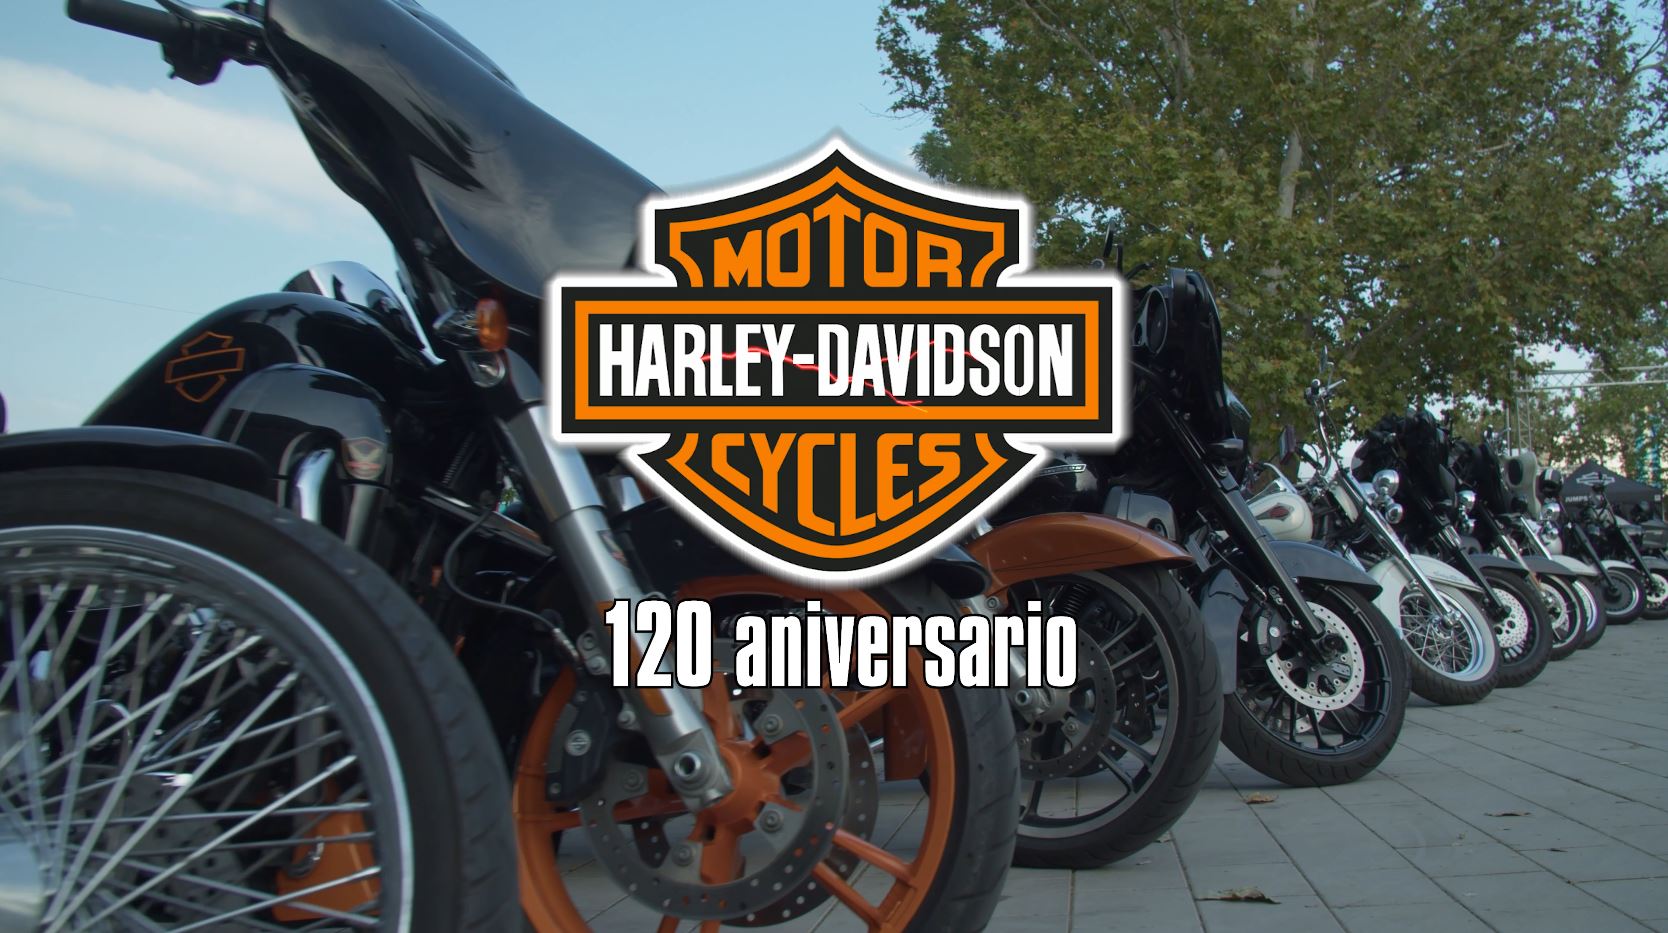 Harley Davidson mayor reputación